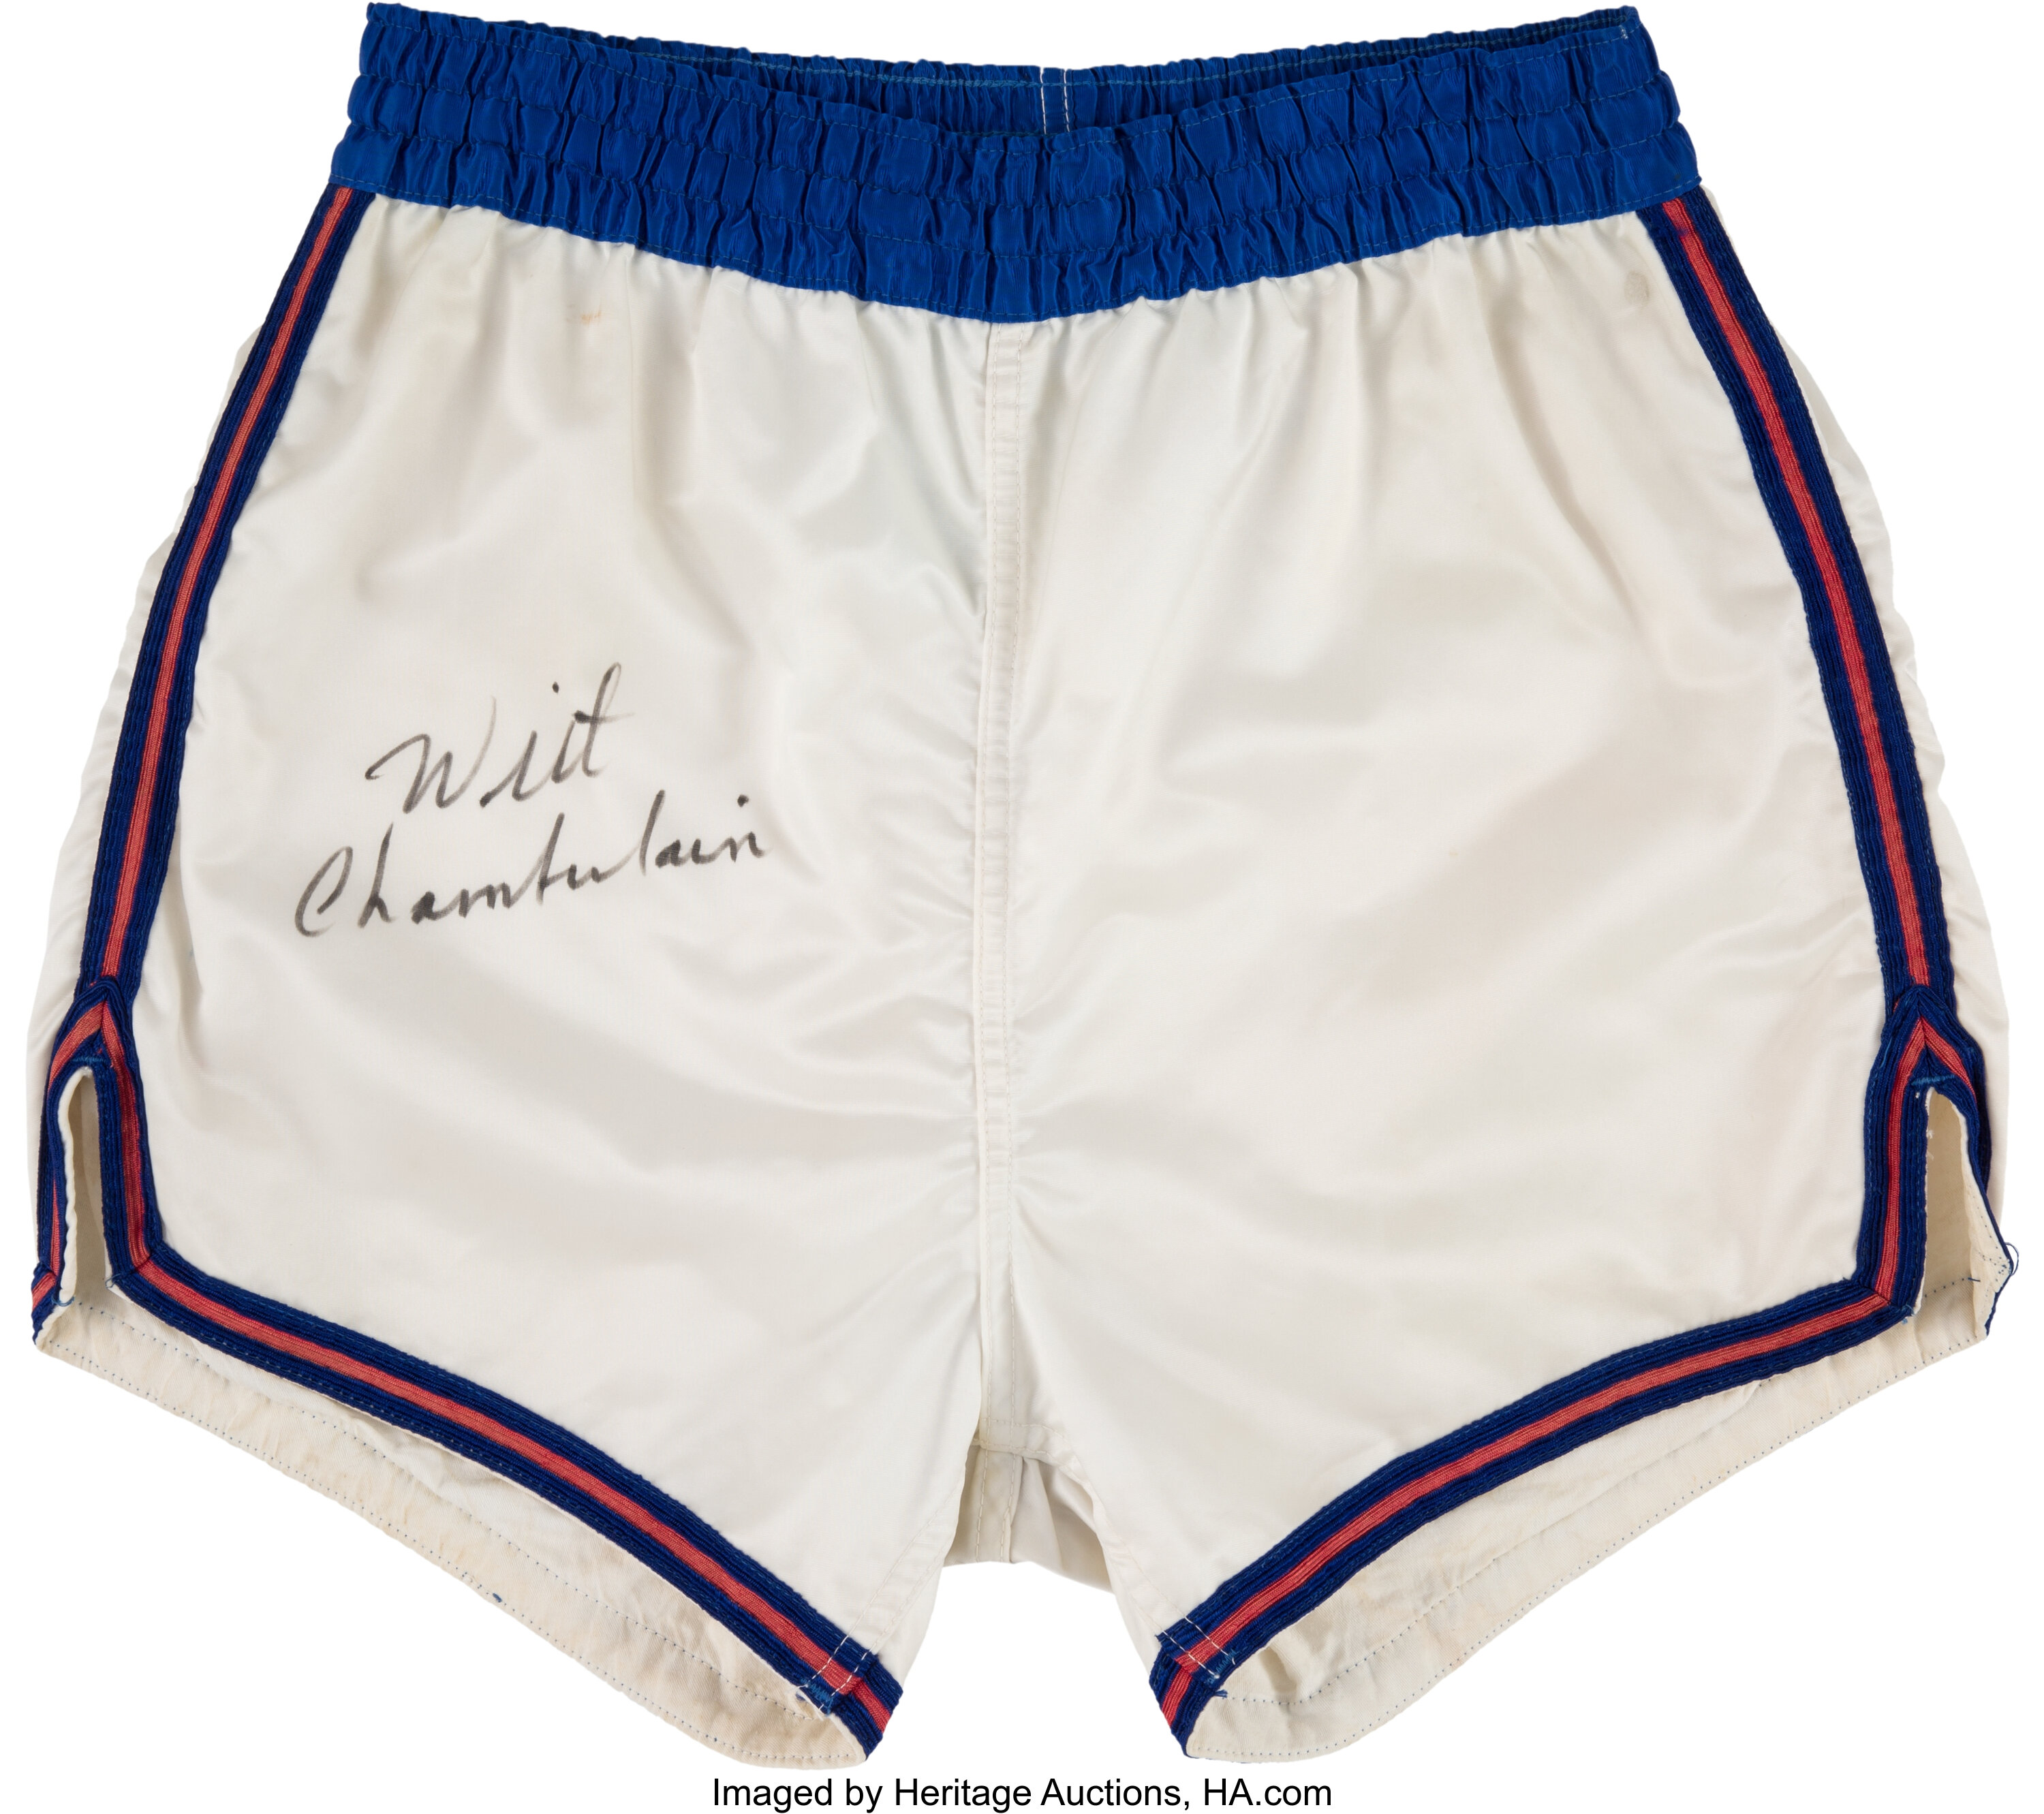 1965-66 Wilt Chamberlain Signed Game Worn Philadelphia 76ers Jersey, Lot  #50010